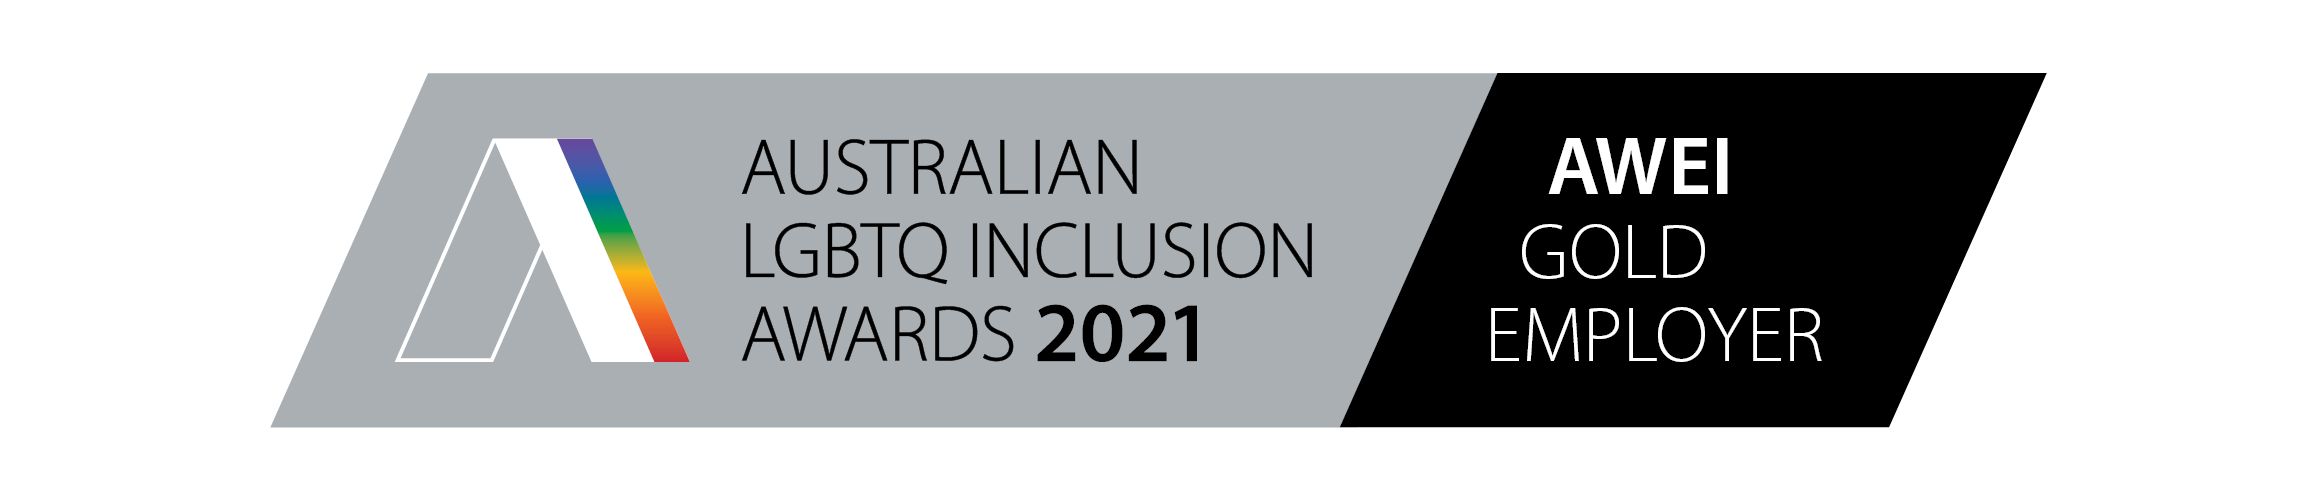 Australian LGBTQ Inclusion Awards 2021 – AWEI Gold Employer